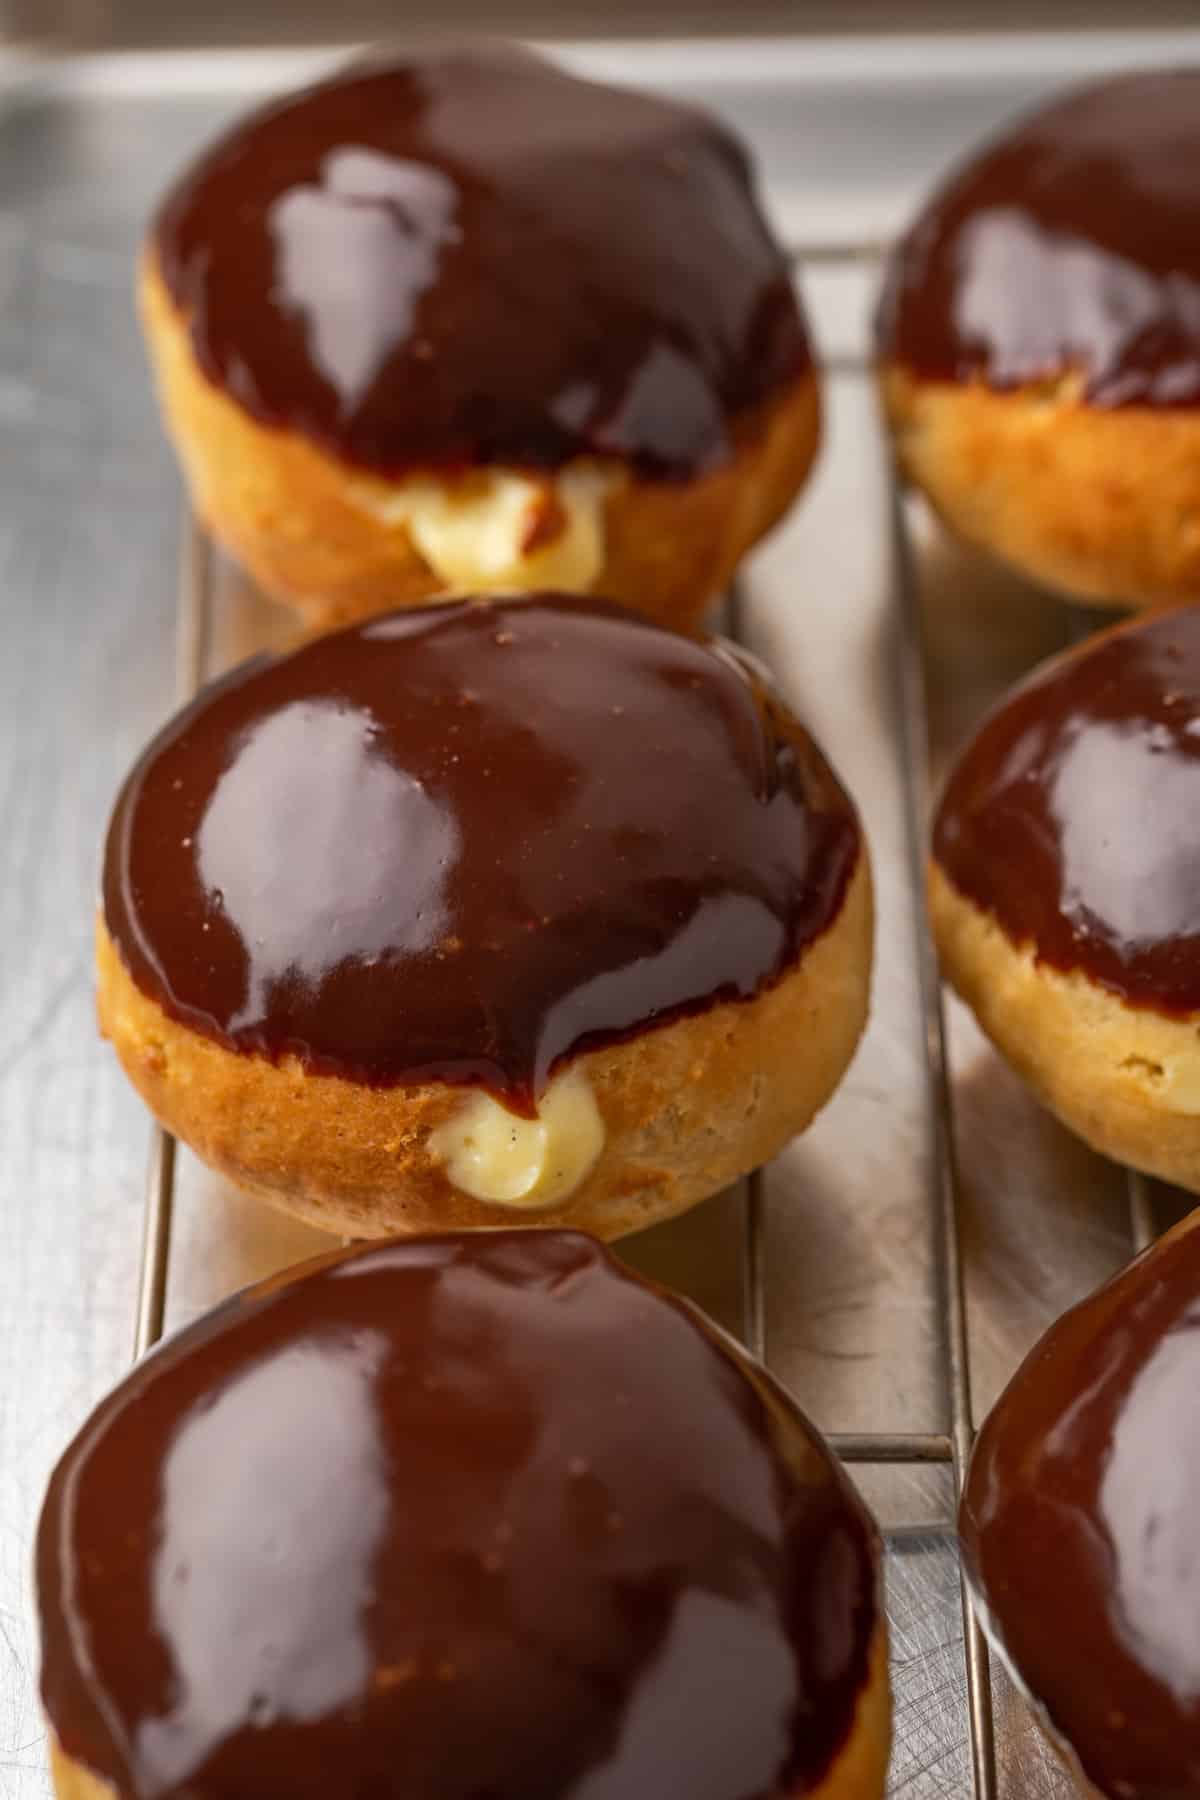 A tray of chocolate-glazed cream-filled gluten-free Boston Cream Pie donuts.